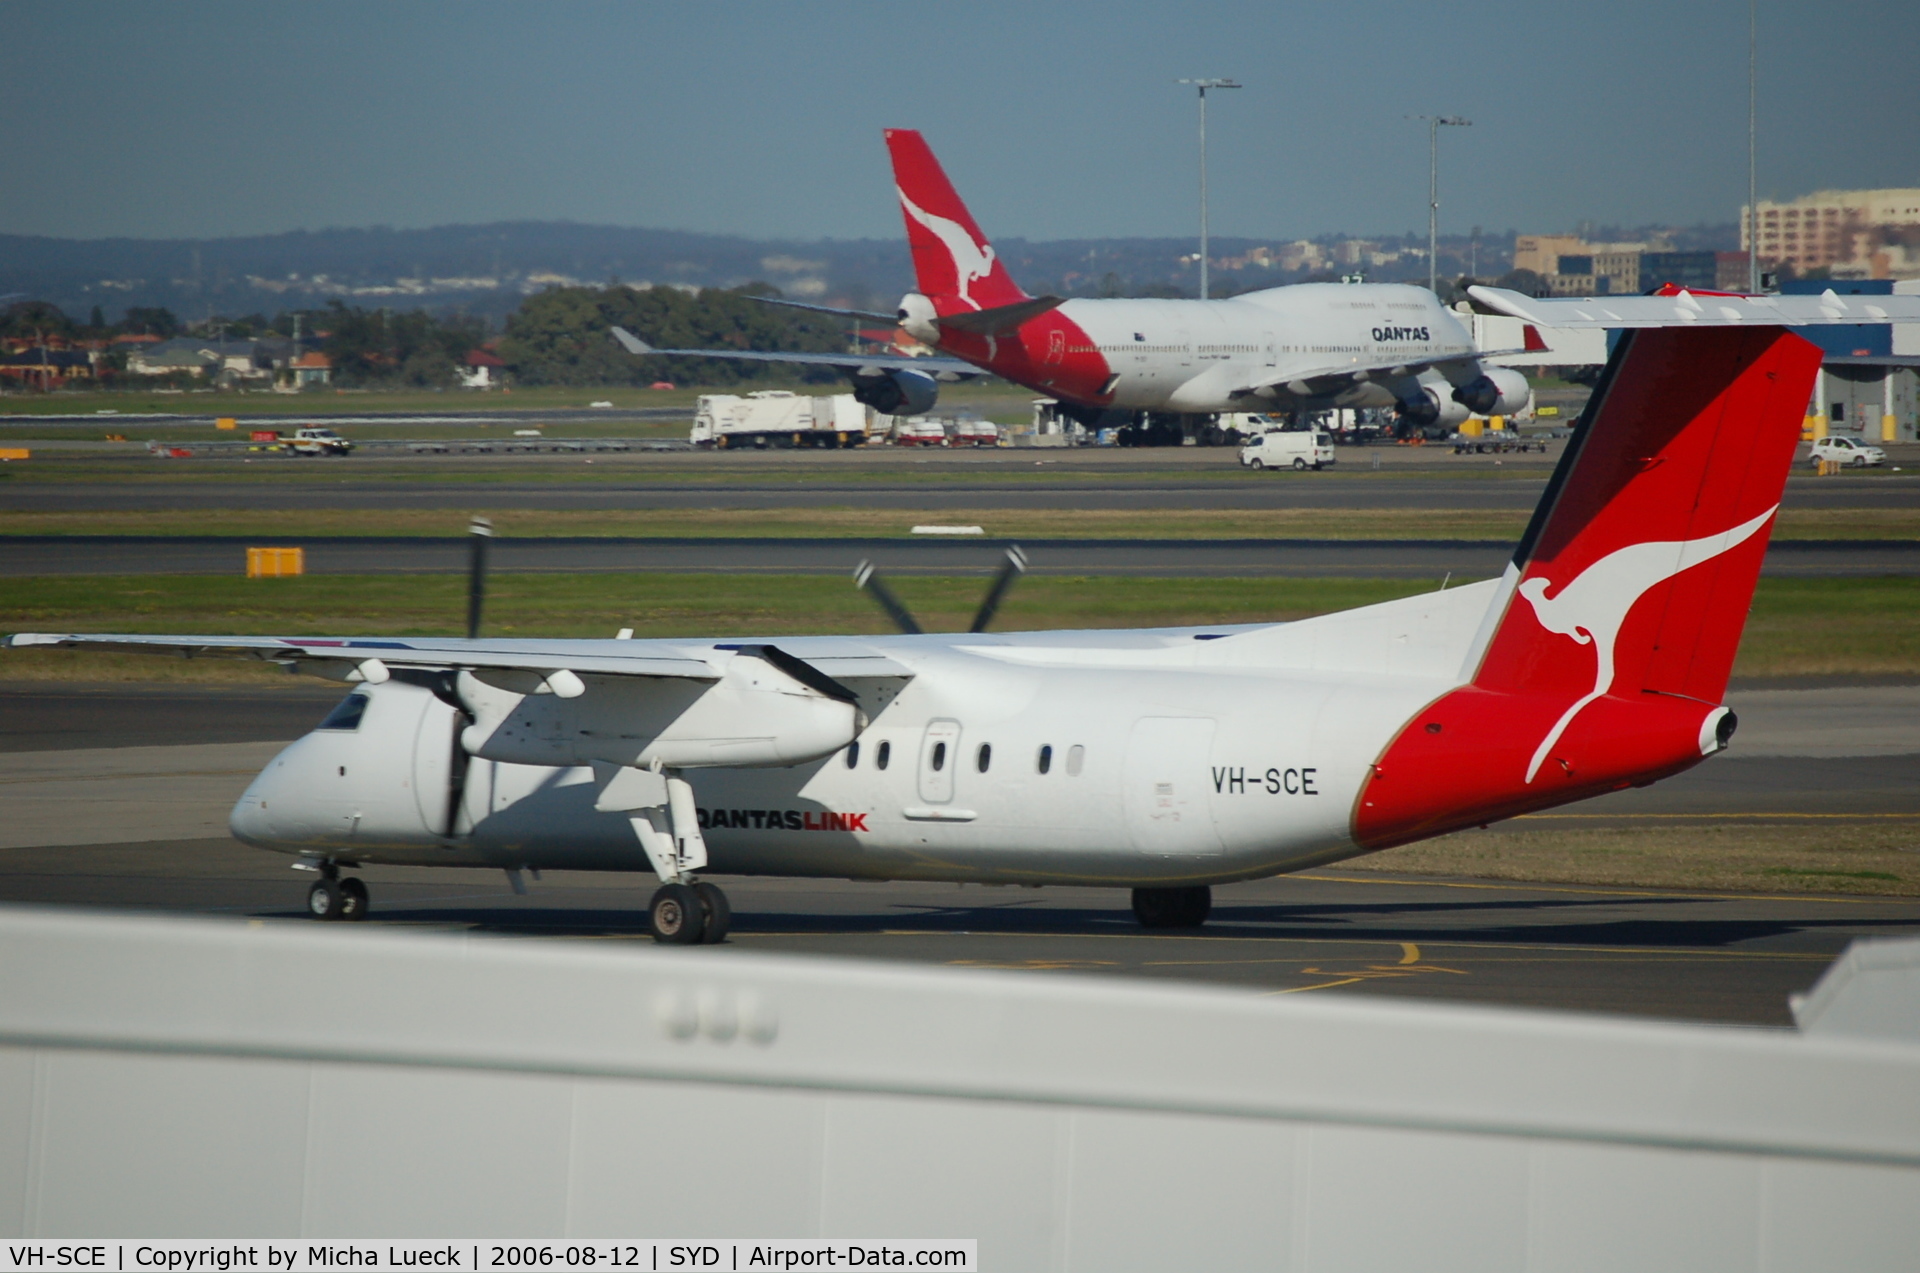 VH-SCE, 2004 De Havilland Canada DHC-8-315Q Dash 8 C/N 602, Bombardier Dash 8 of Qantas Link in Sydney